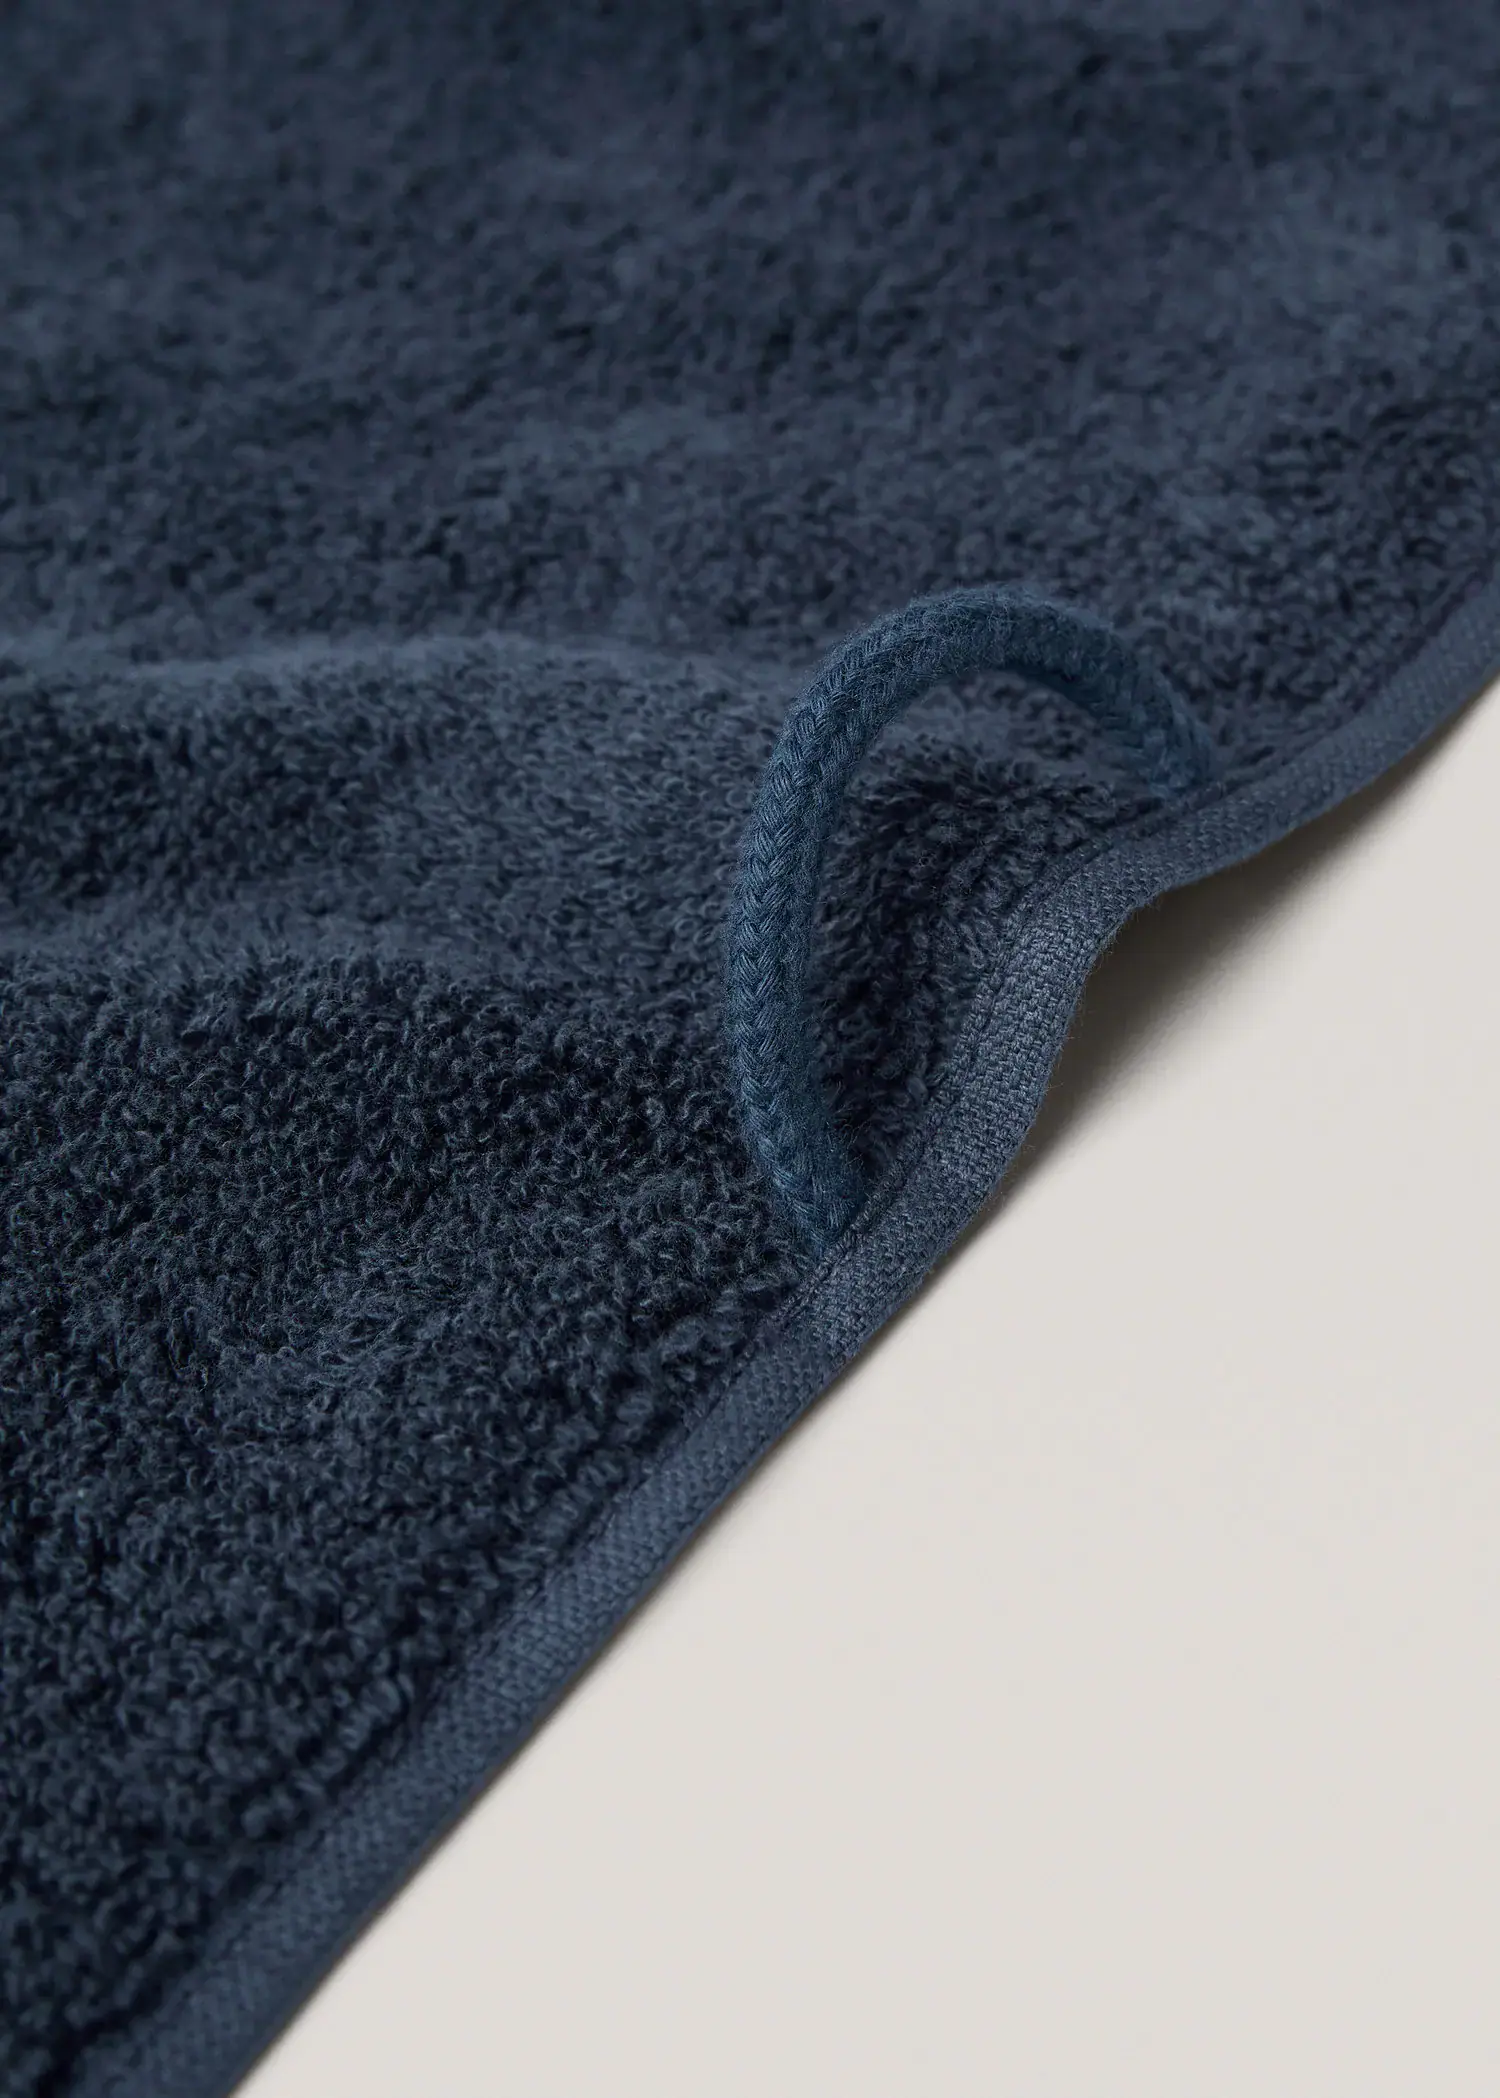 Mango 500gr/m2 cotton bath towel 70x140cm. 3